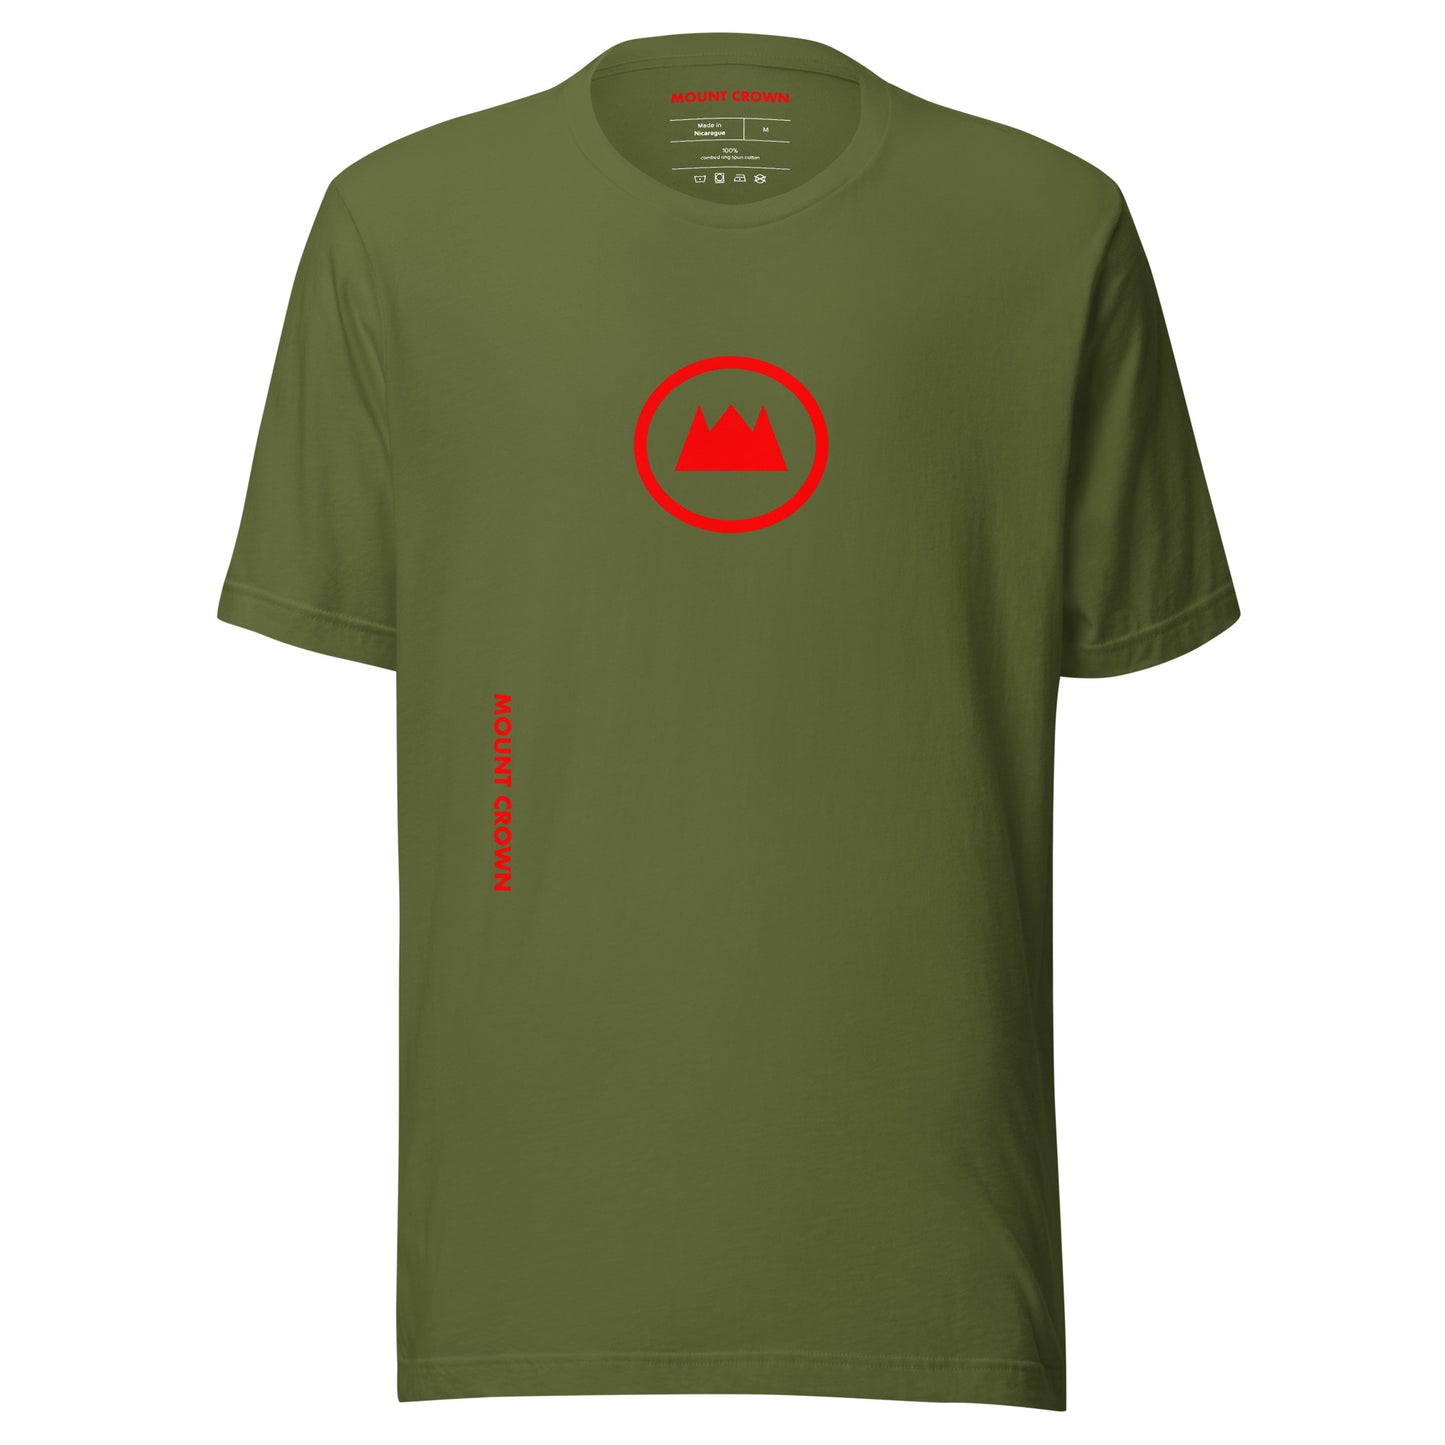 MOUNT CROWN (R) Unisex T-shirt